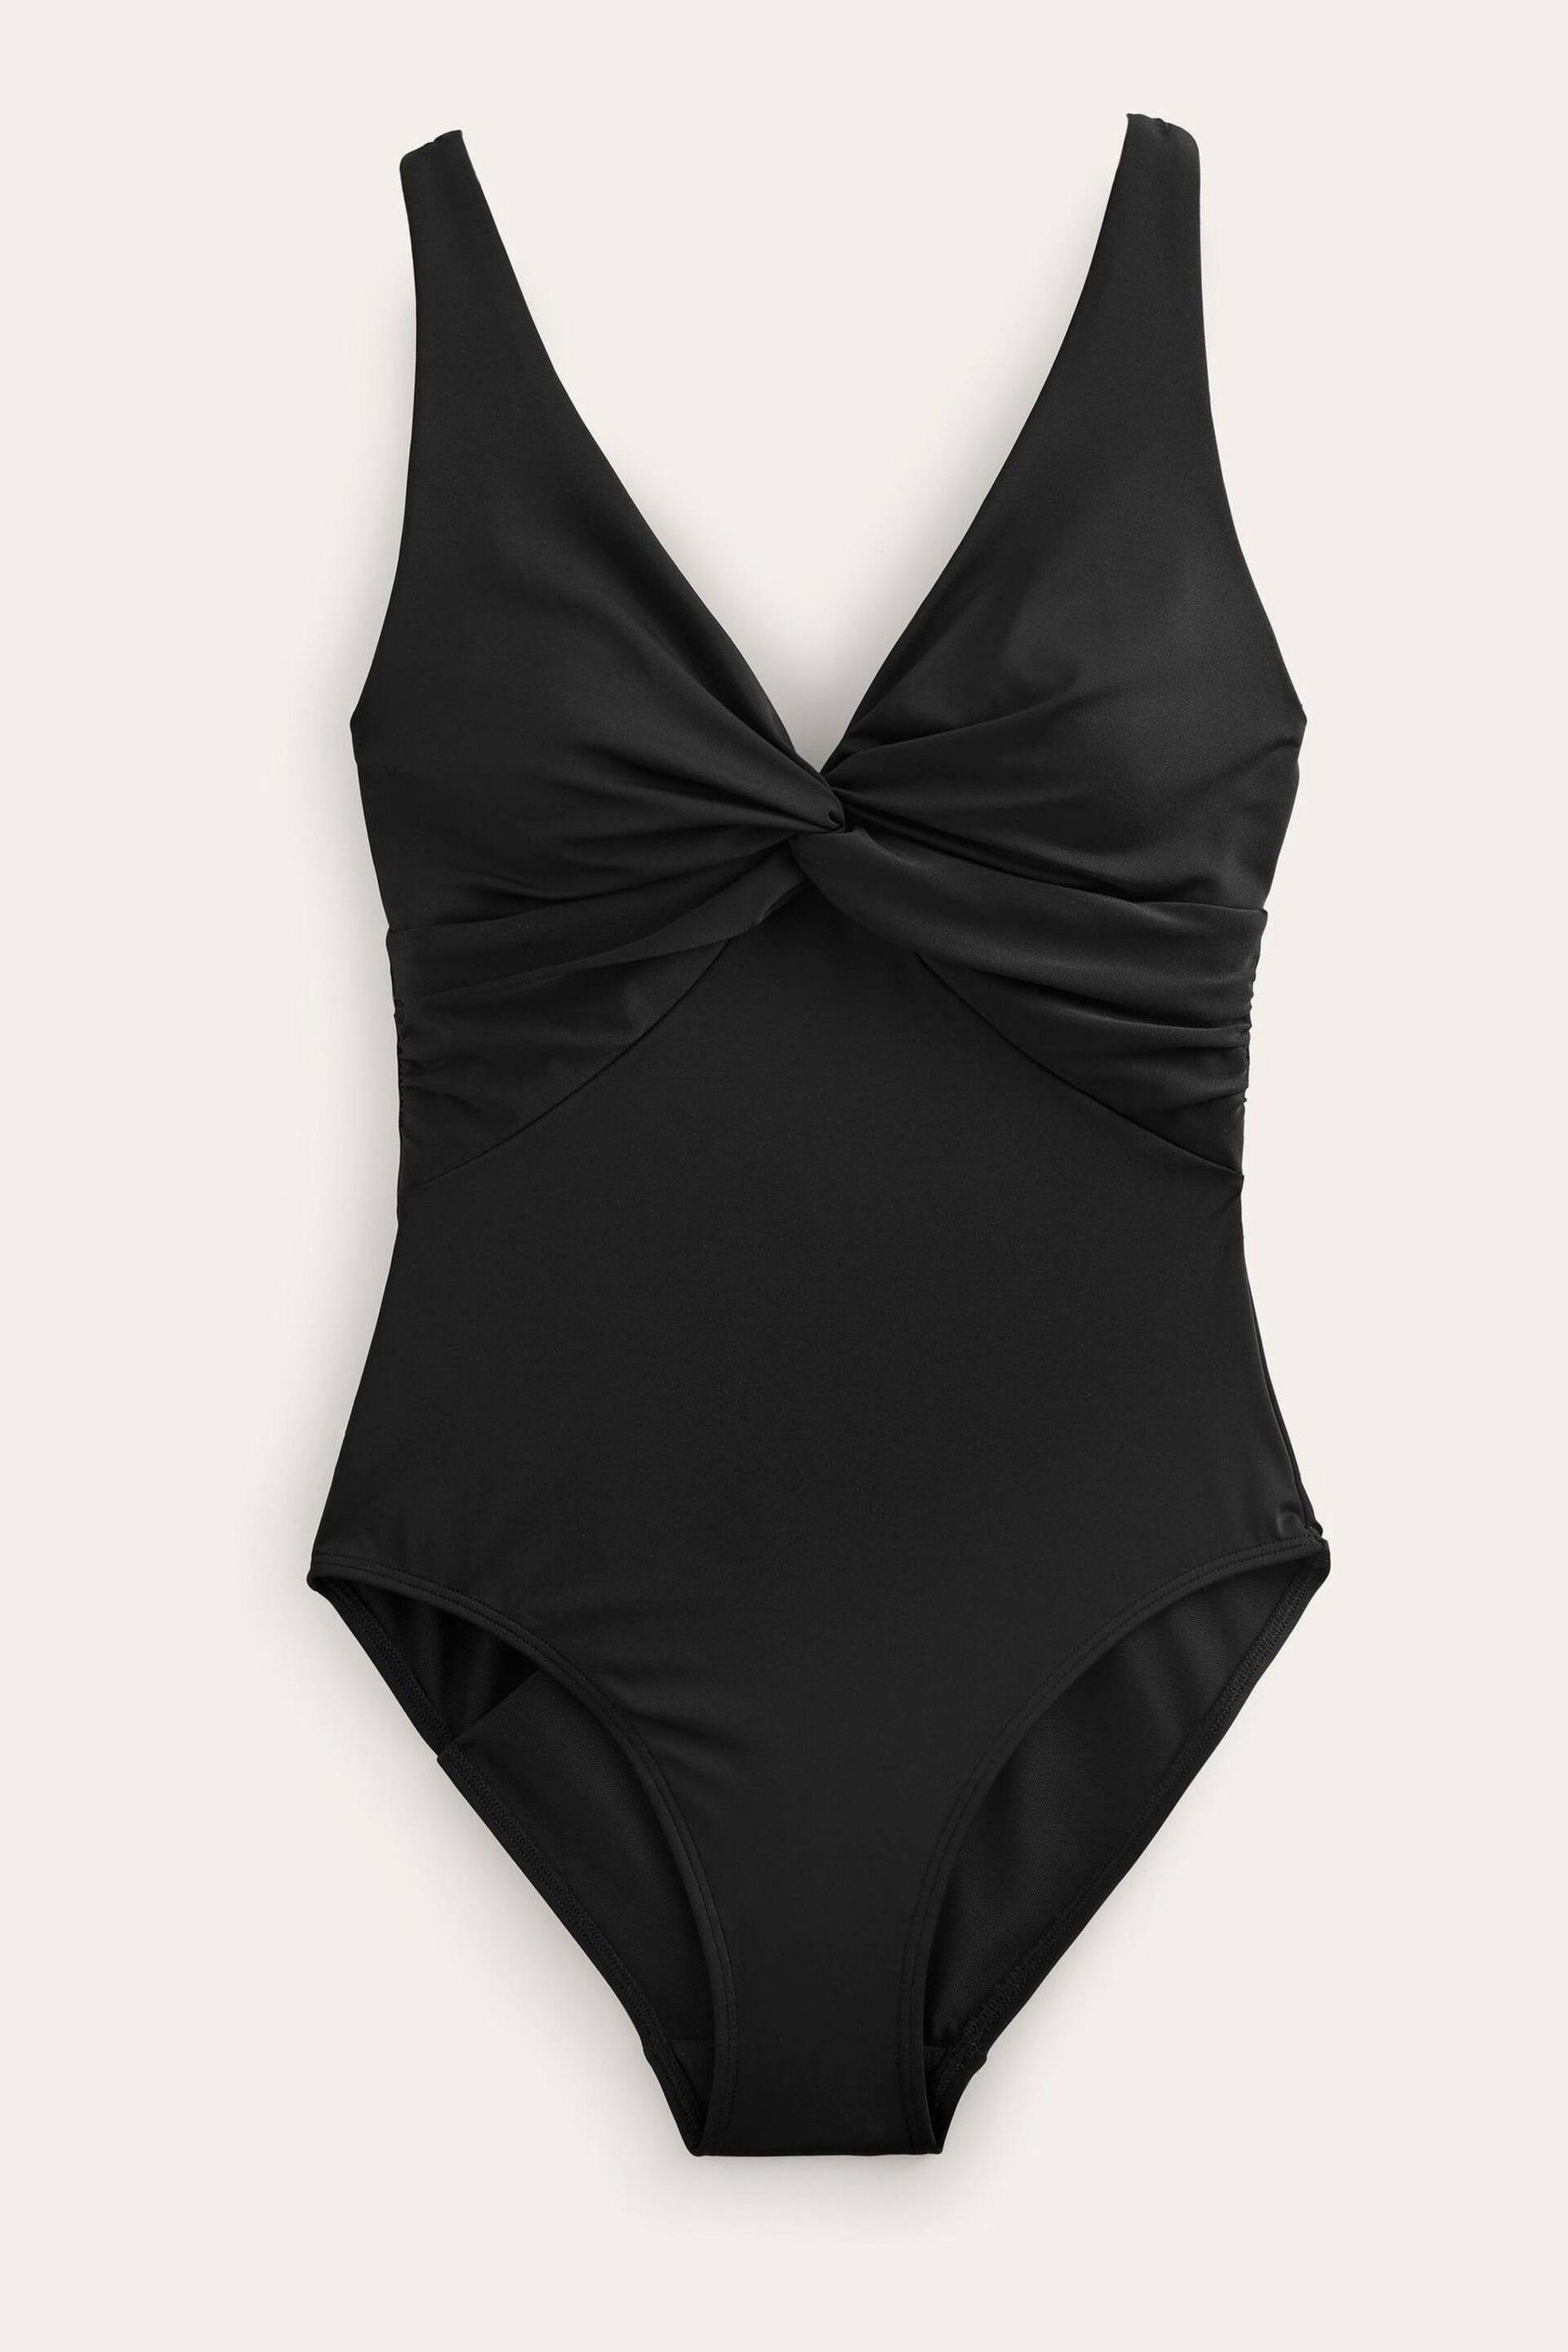 Boden Black Chrome Twist Classic Swimsuit - Image 4 of 5